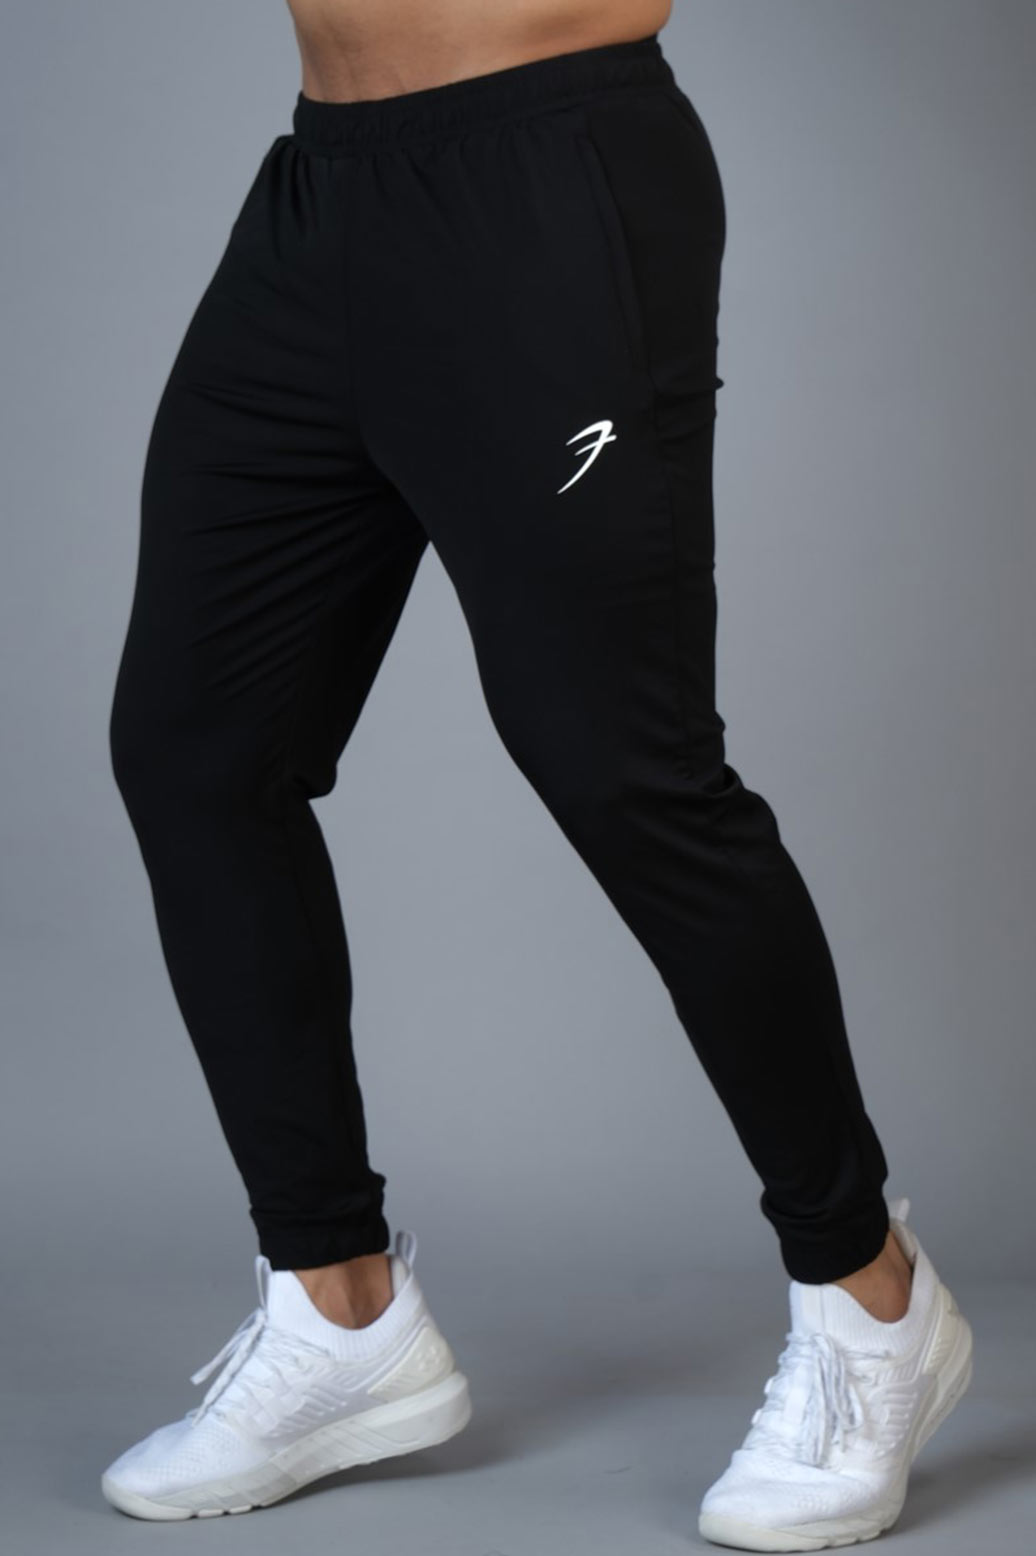 Get Premium-Quality Running Nylon Track Pants For Men at Jeffa – JEFFA